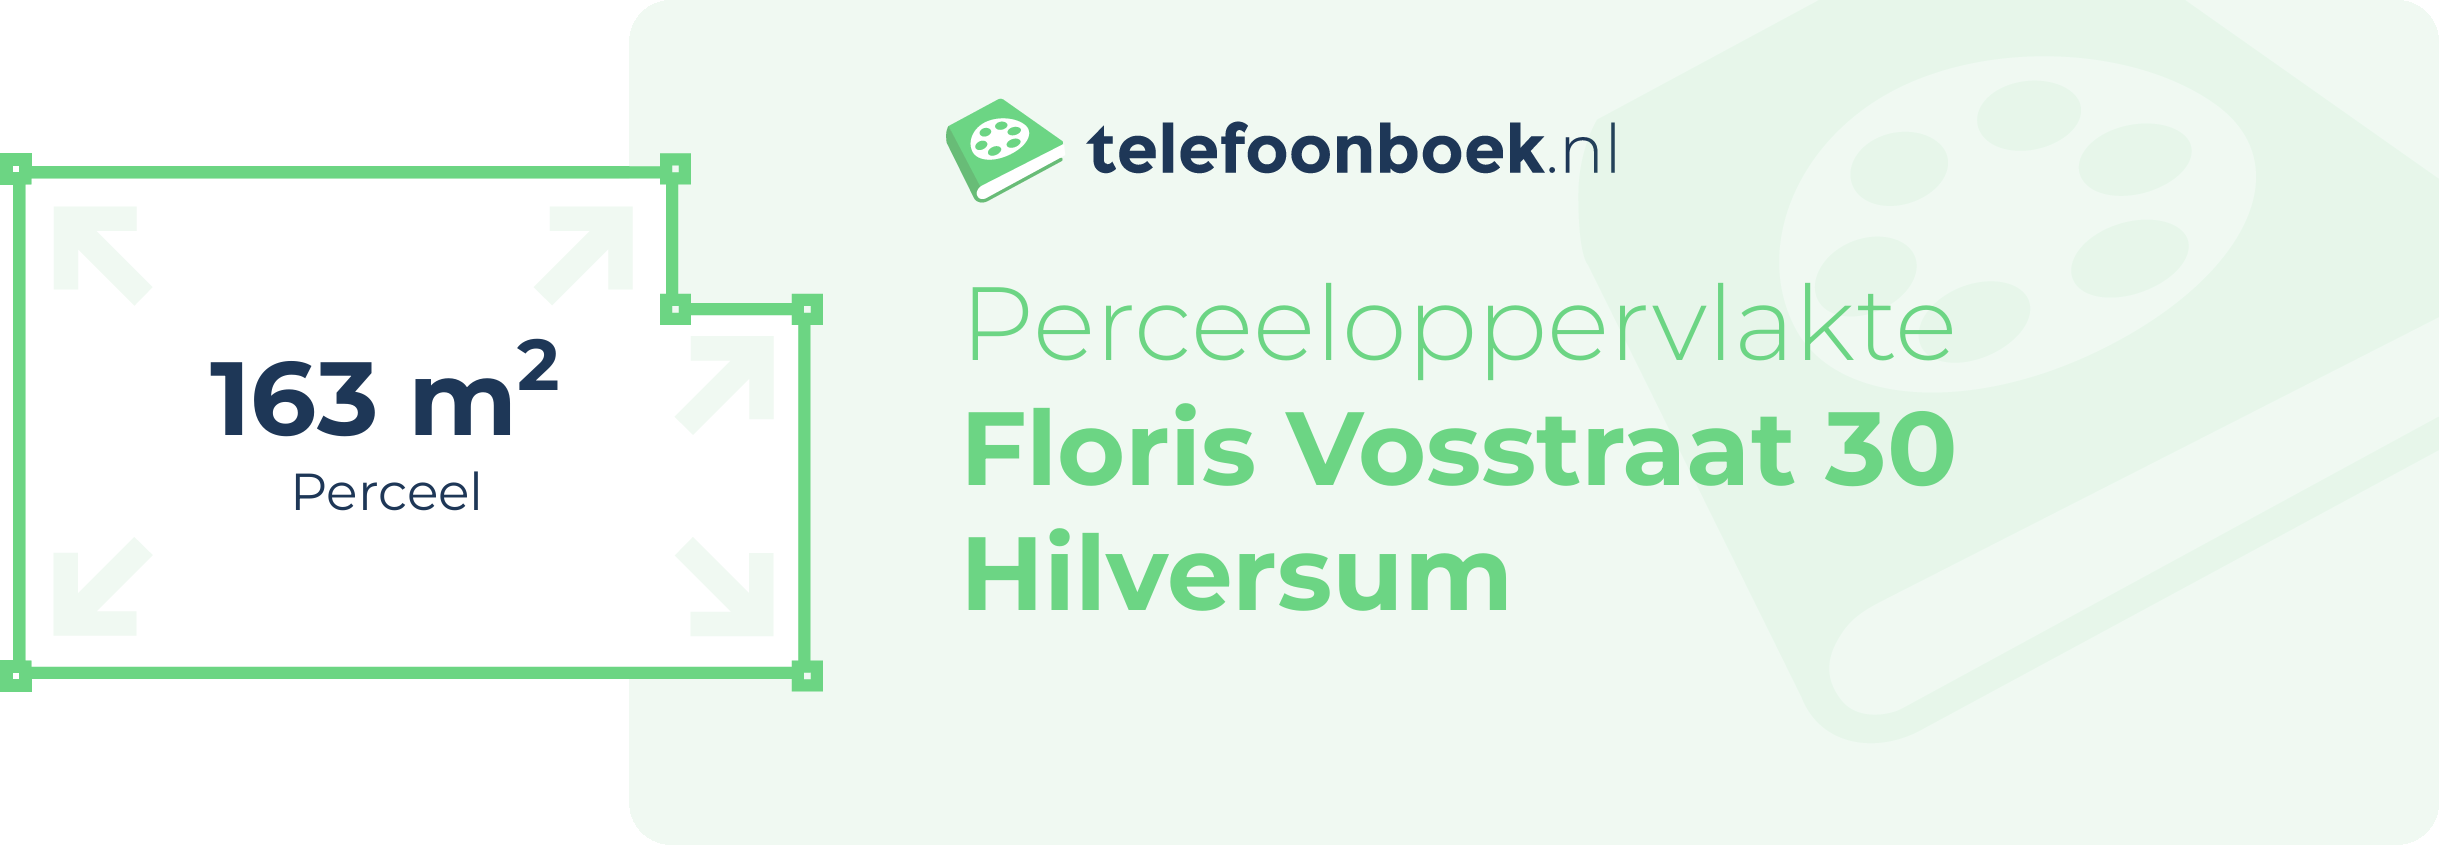 Perceeloppervlakte Floris Vosstraat 30 Hilversum